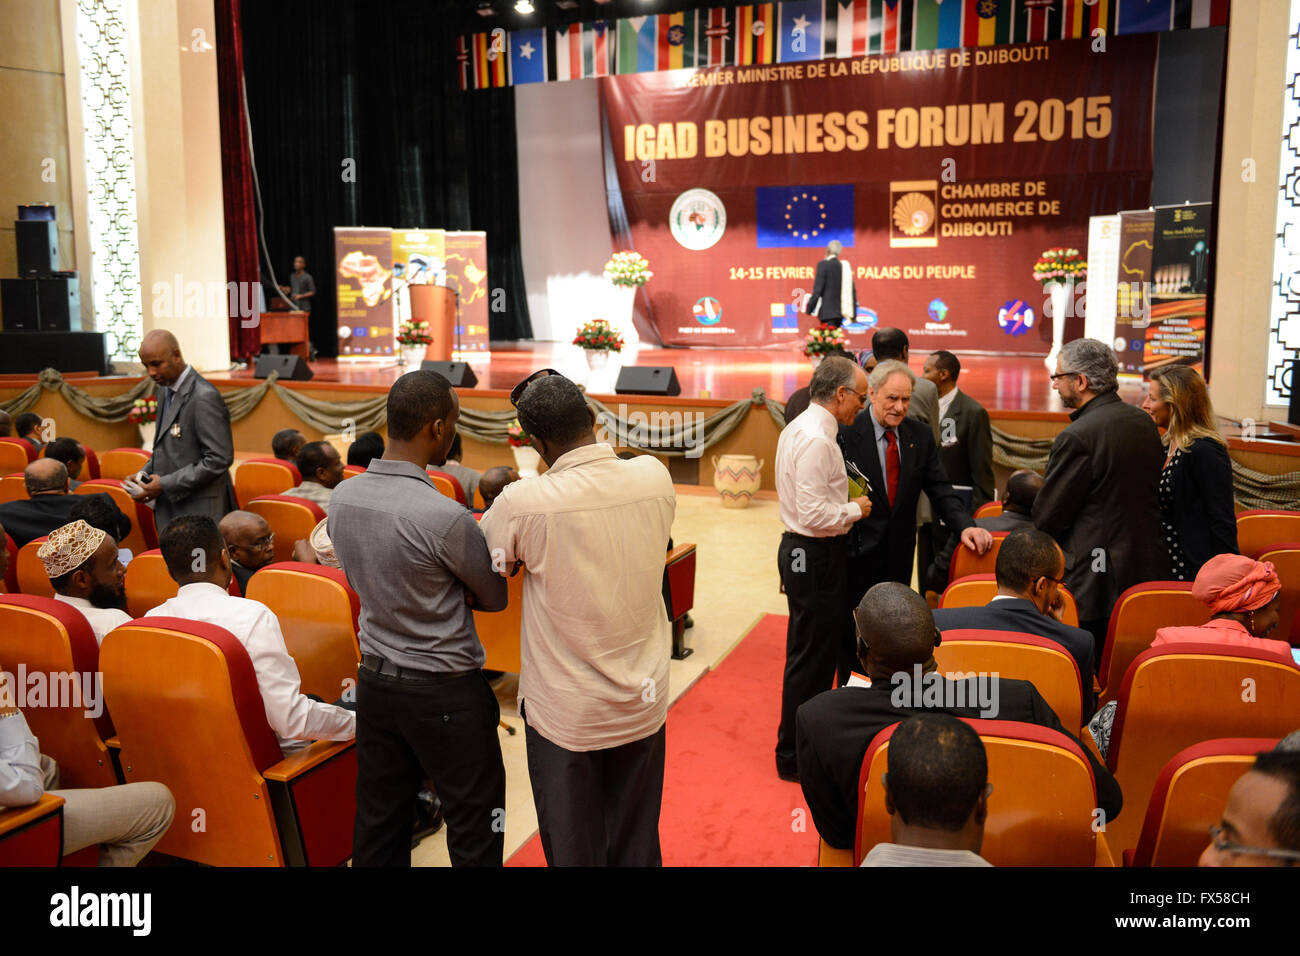 Conferenza di Gibuti IGAD Business Forum 2015 / DSCHIBUTI Konferenz IGAD Business Forum 2015 Foto Stock